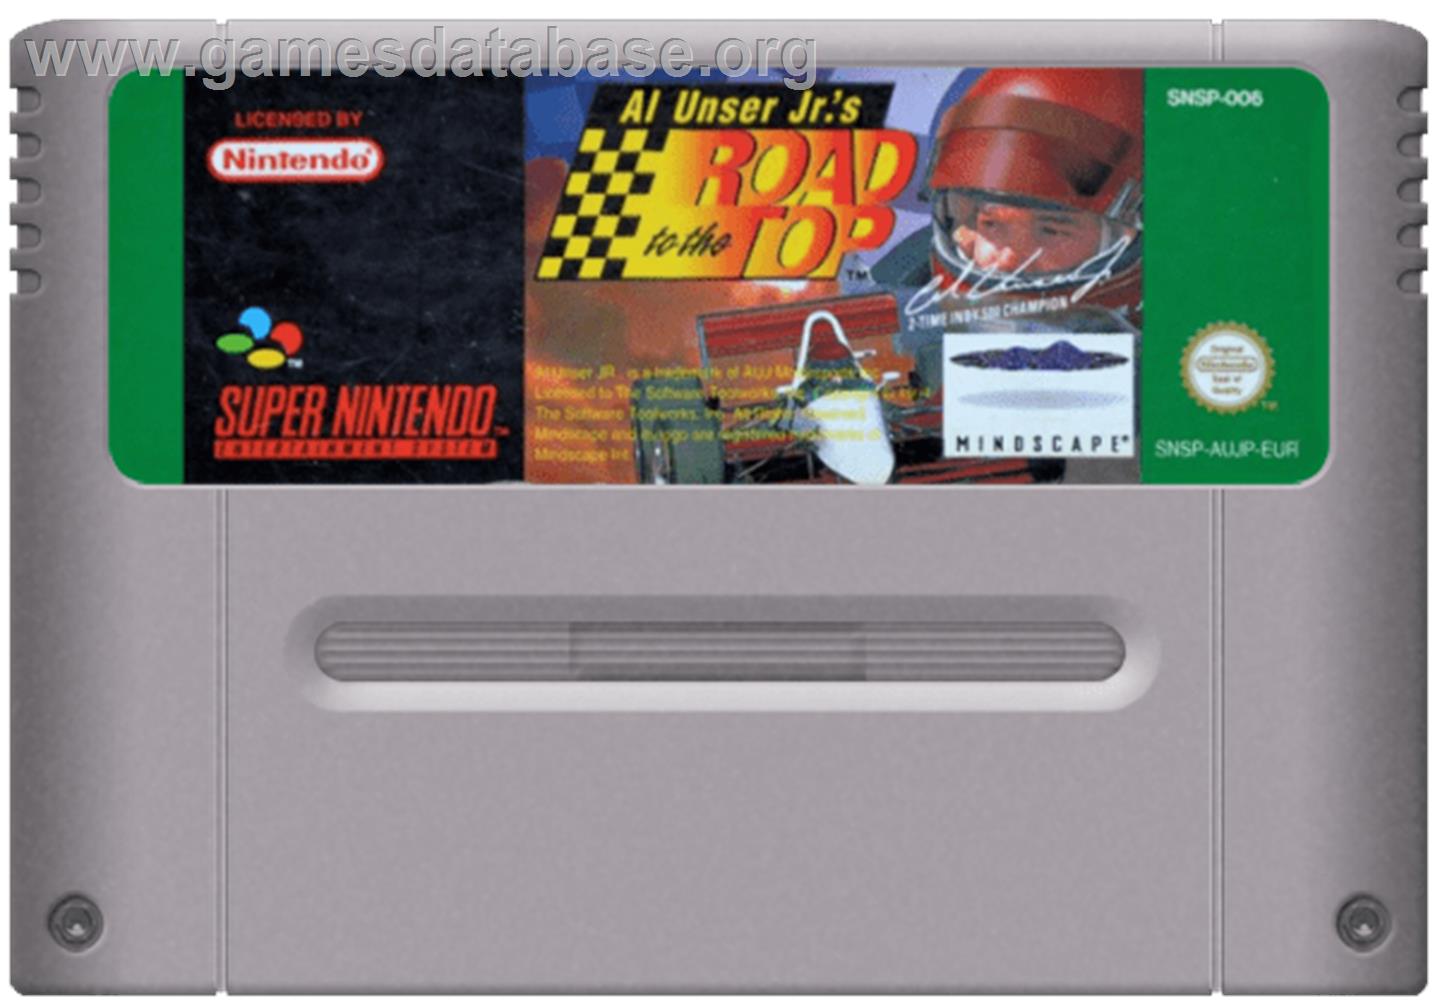 Al Unser Jr.'s Road to the Top - Nintendo SNES - Artwork - Cartridge